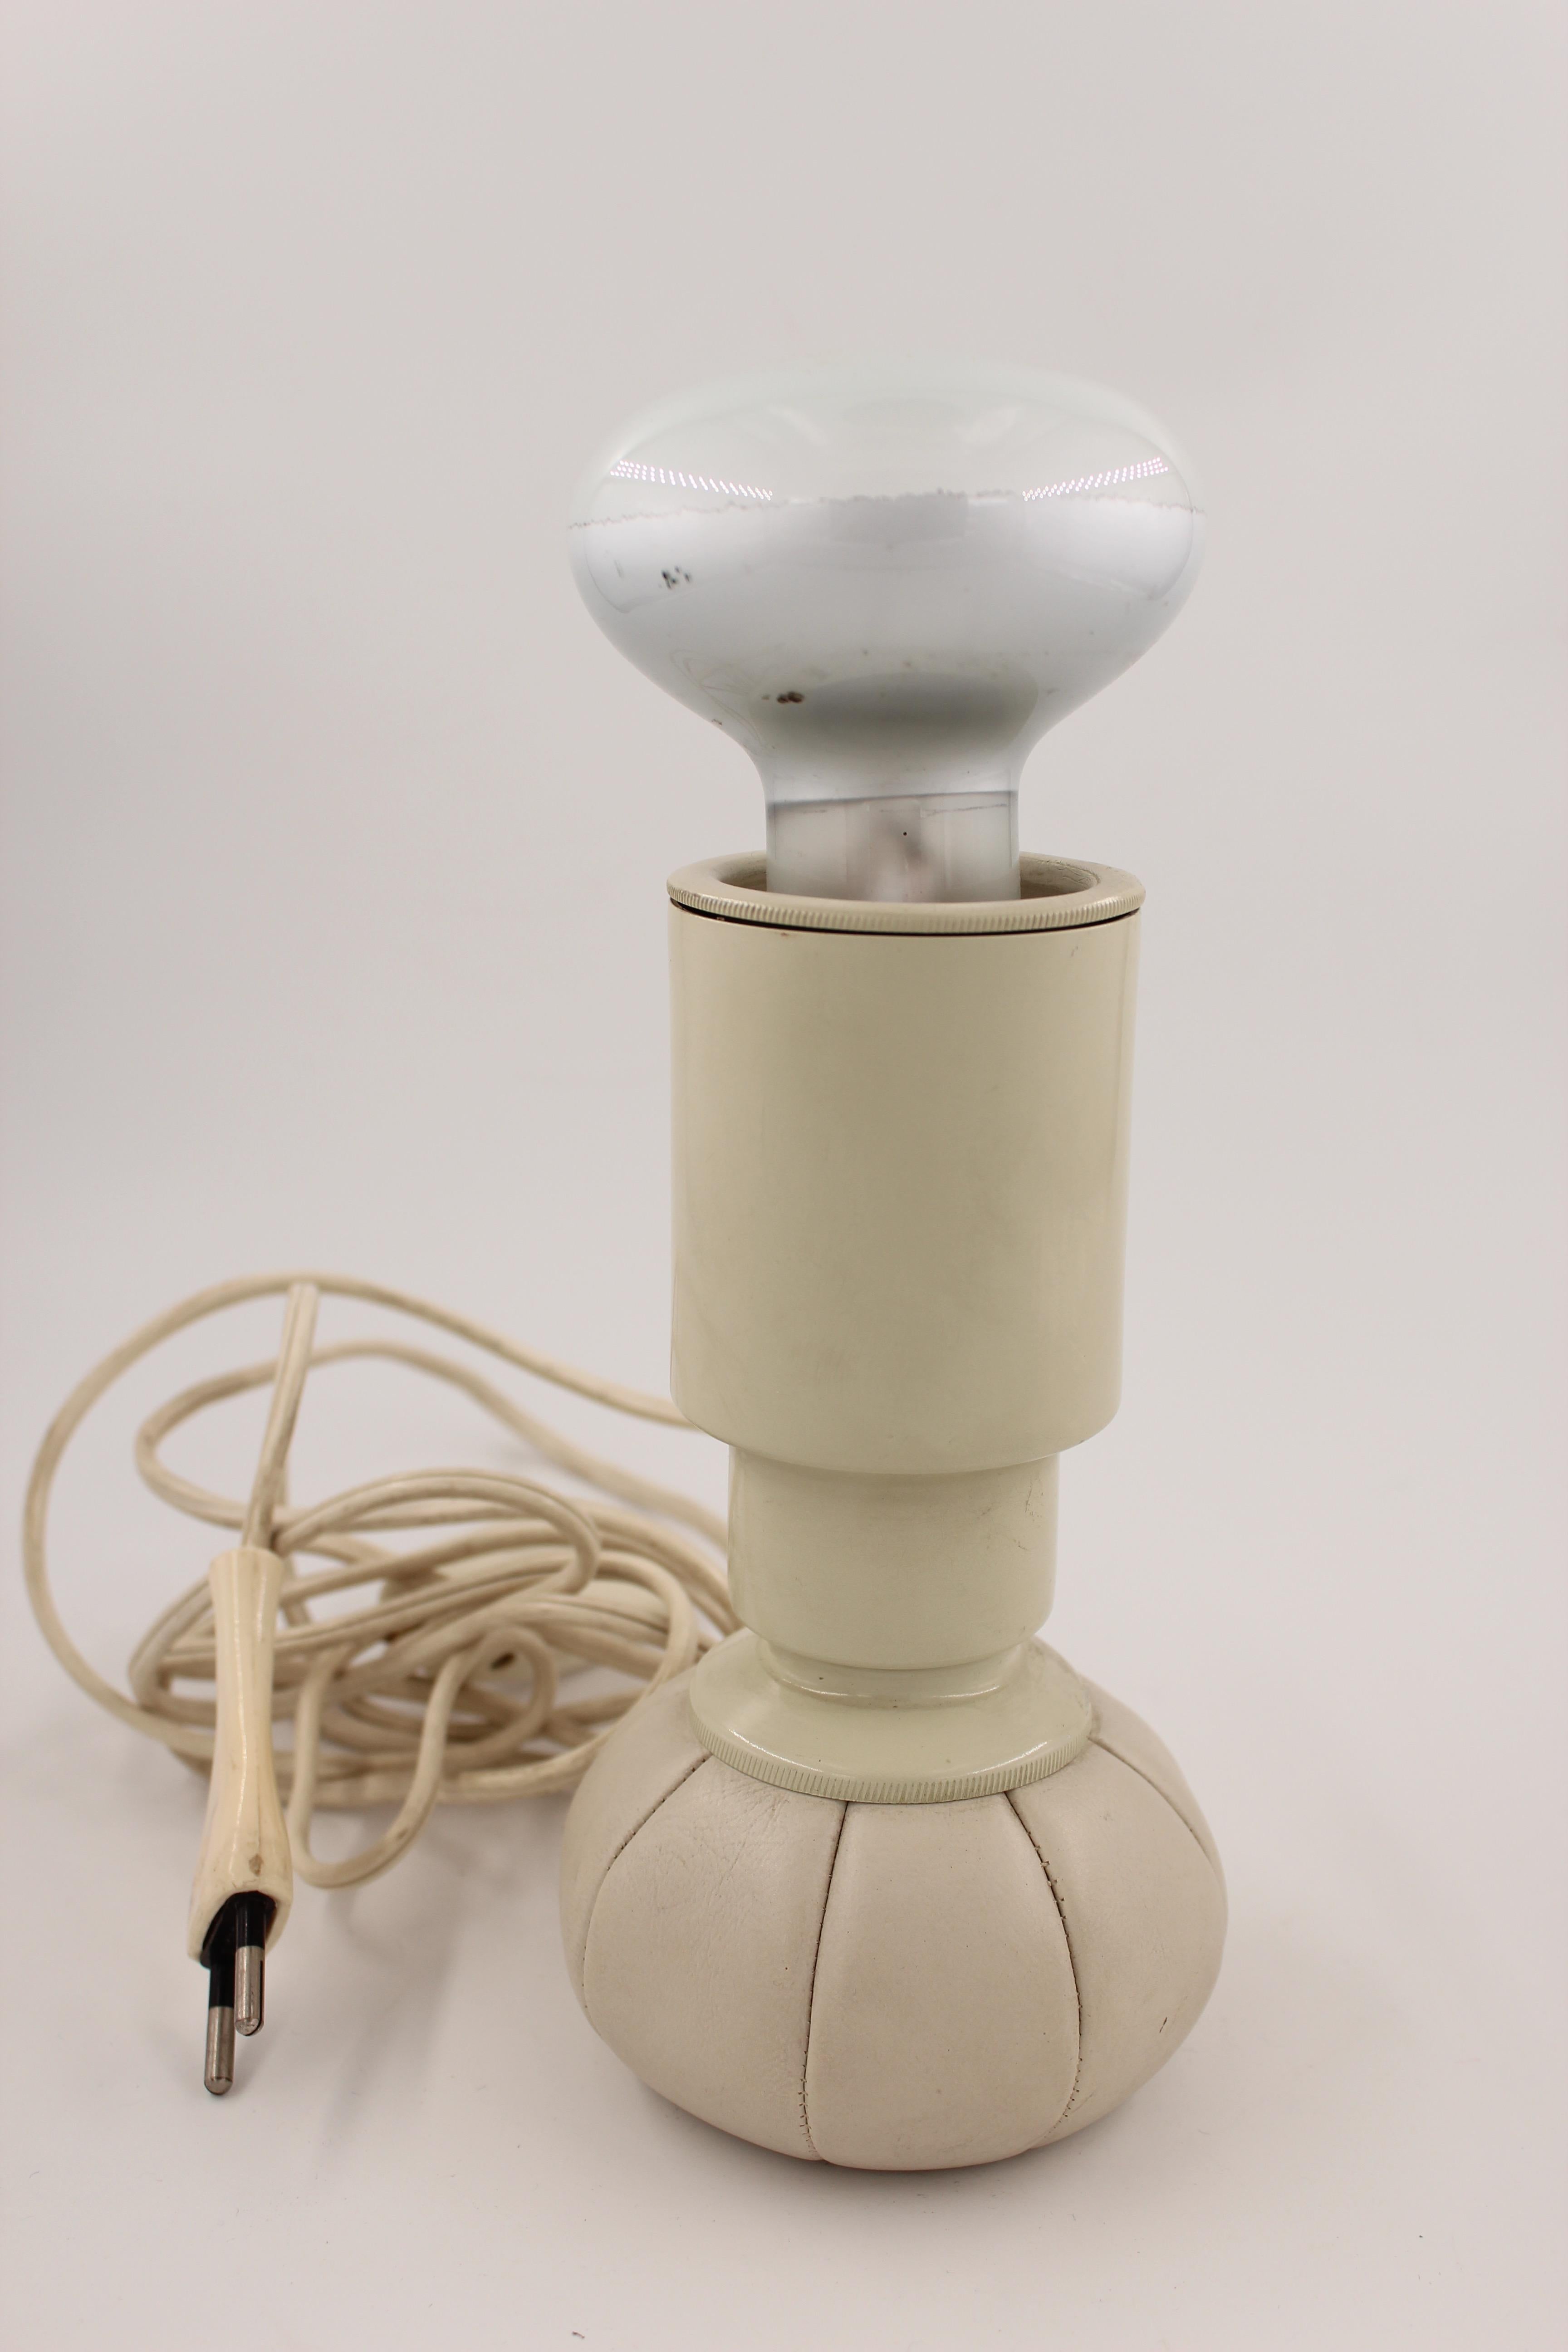 Gino Sarfatti off White 600 Table Lamp for Arteluce, Italy, 1960 2